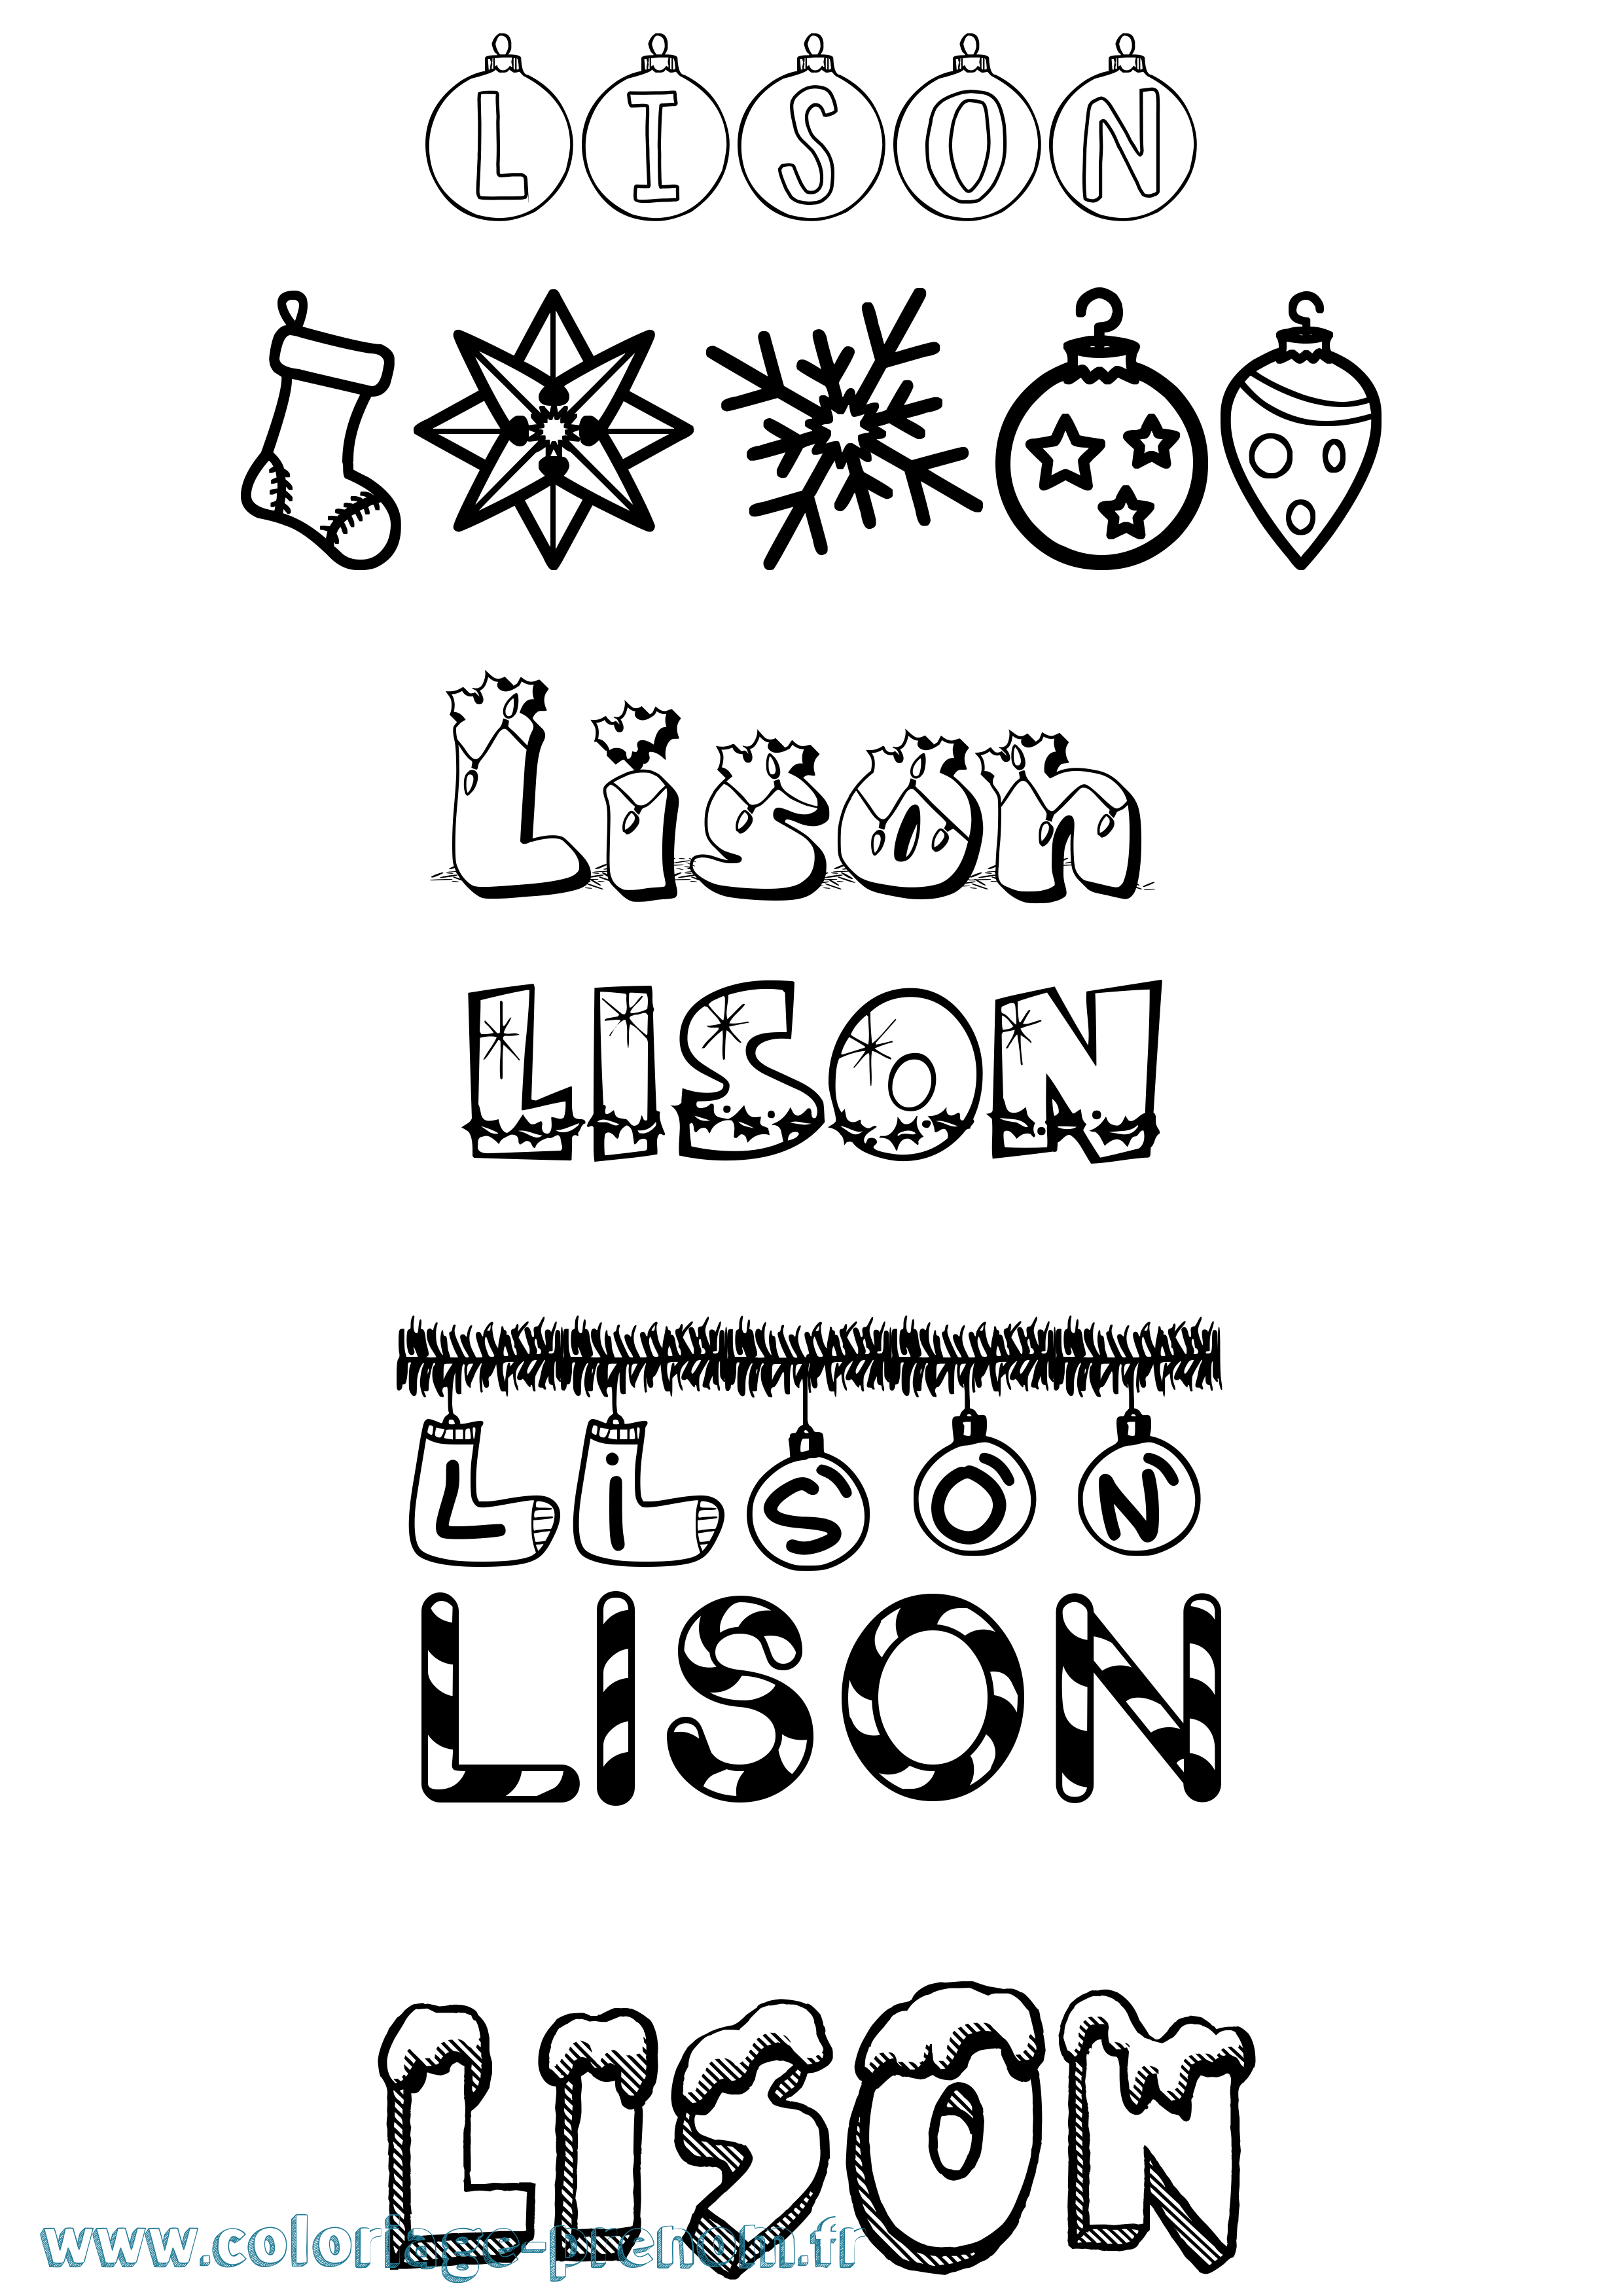 Coloriage prénom Lison